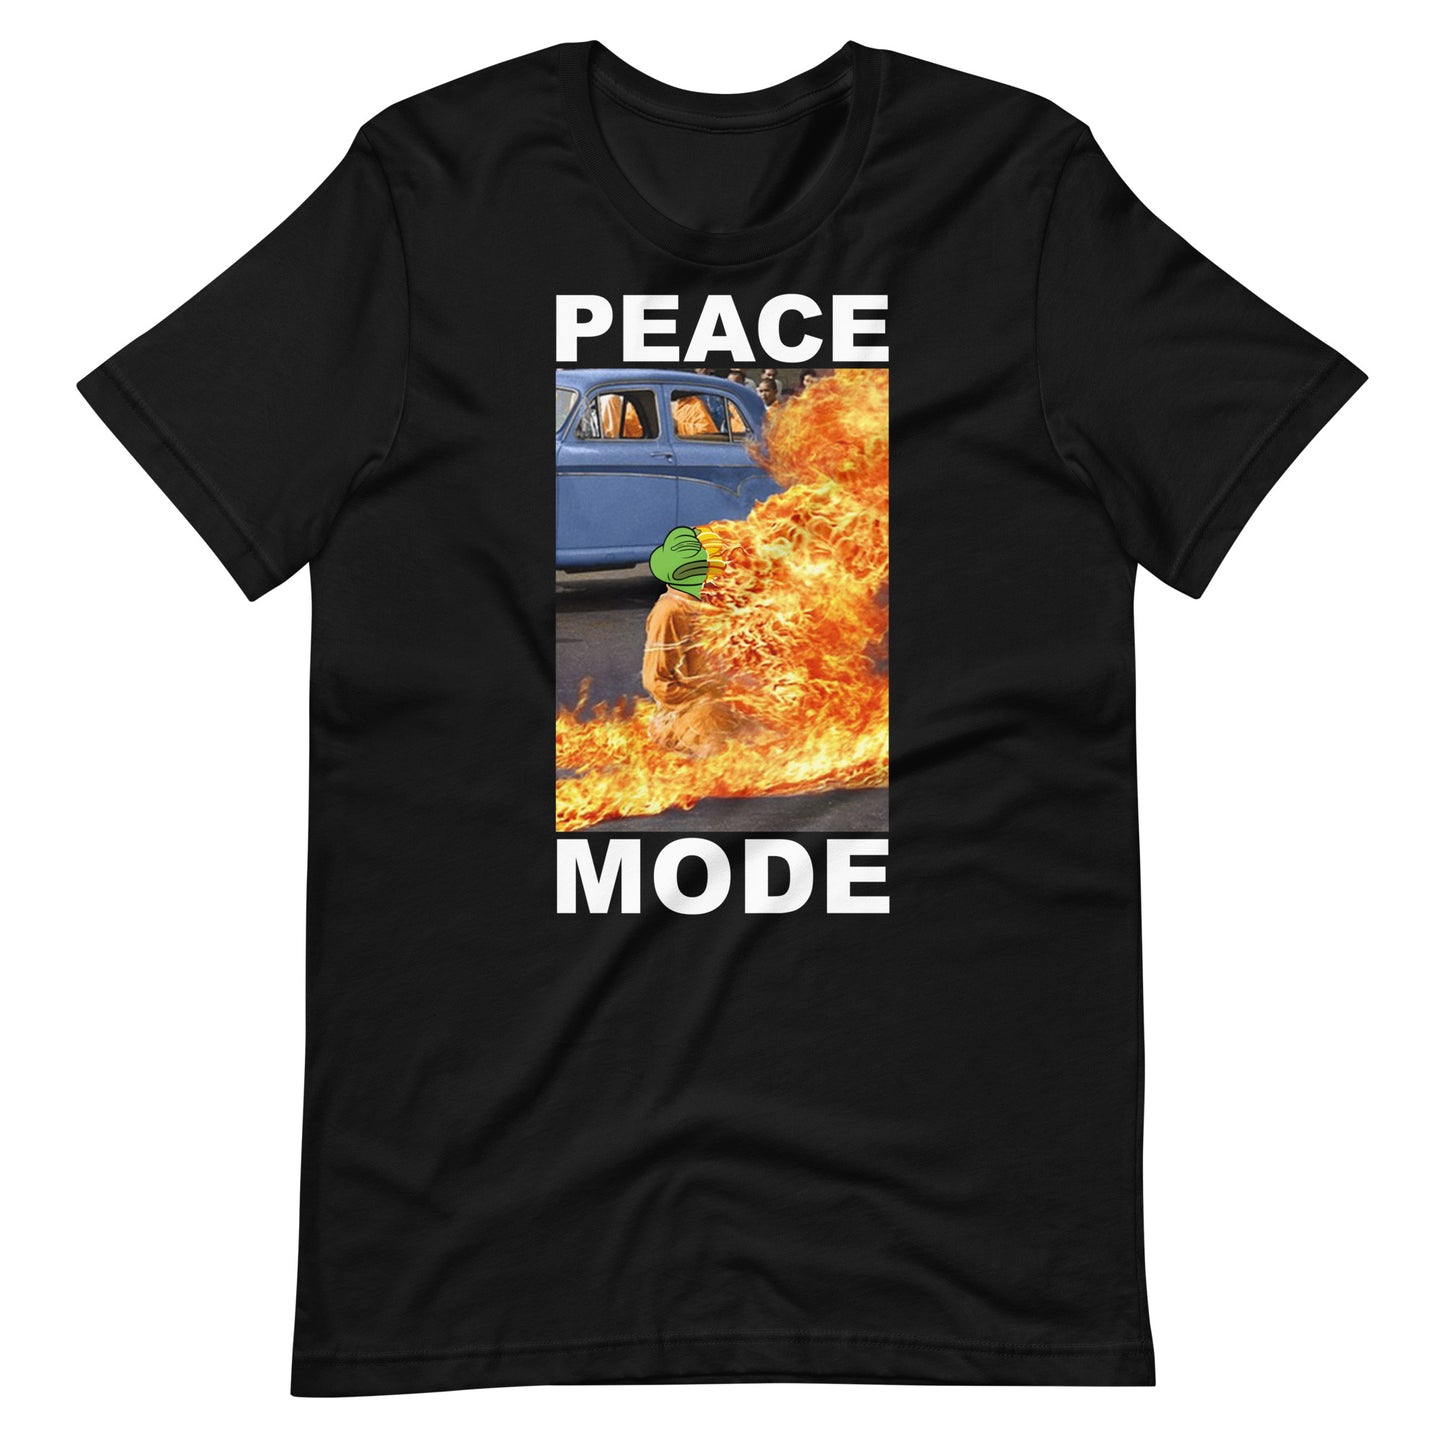 Immolation Monk Unisex T-Shirt